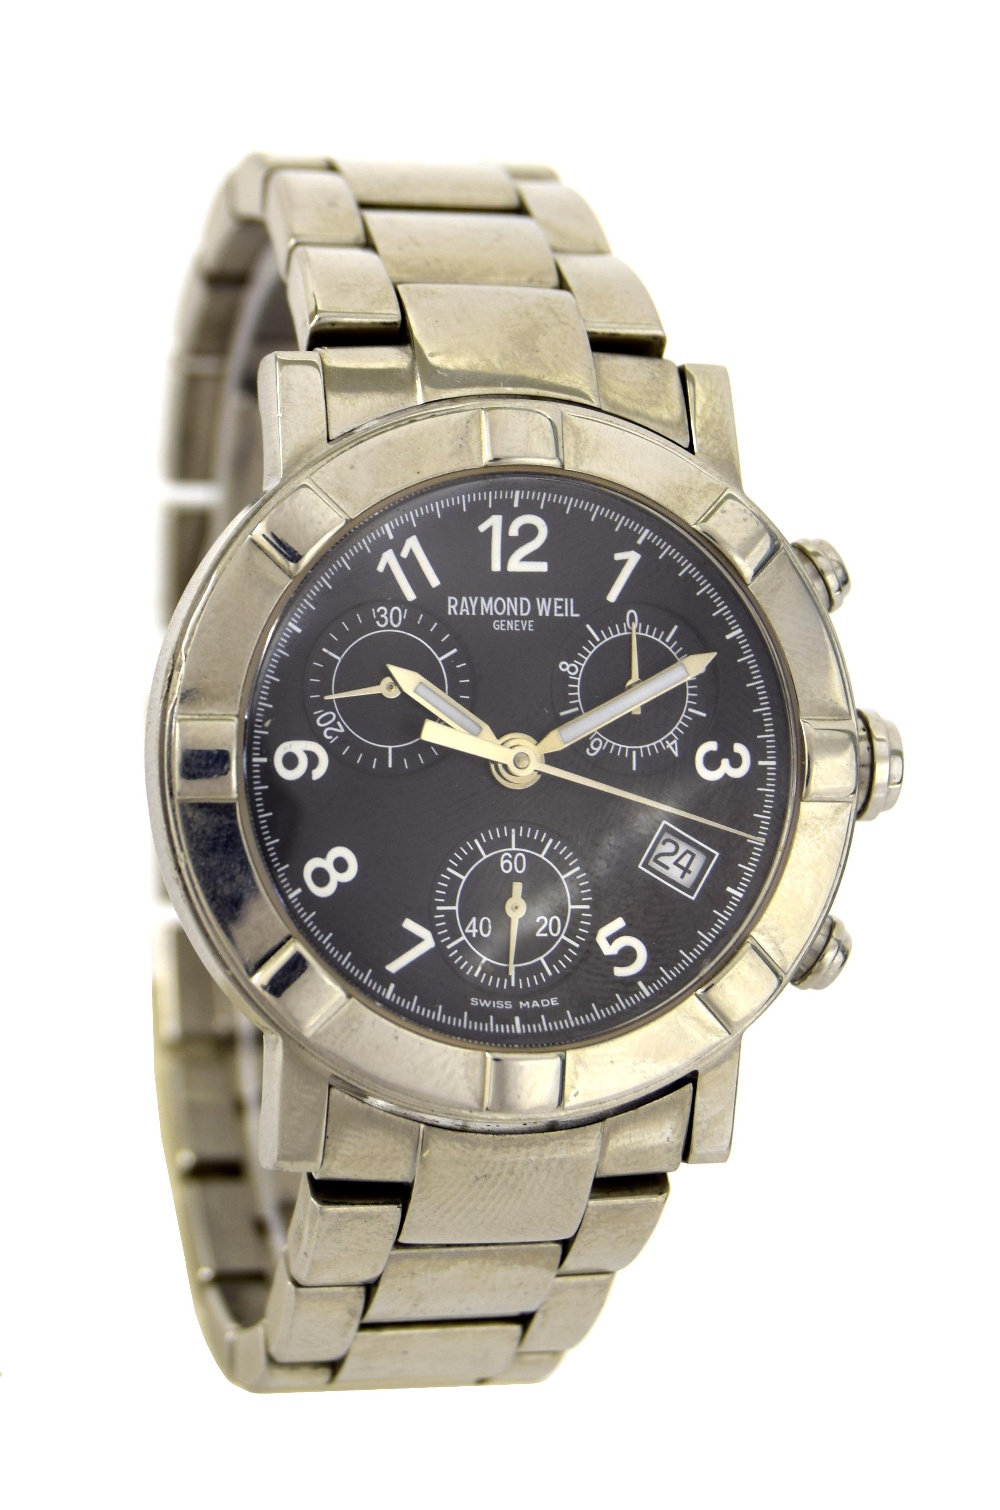 Raymond Weil chronograph stainless steel gentleman's bracelet watch, ref. 5030, no. E802573, black